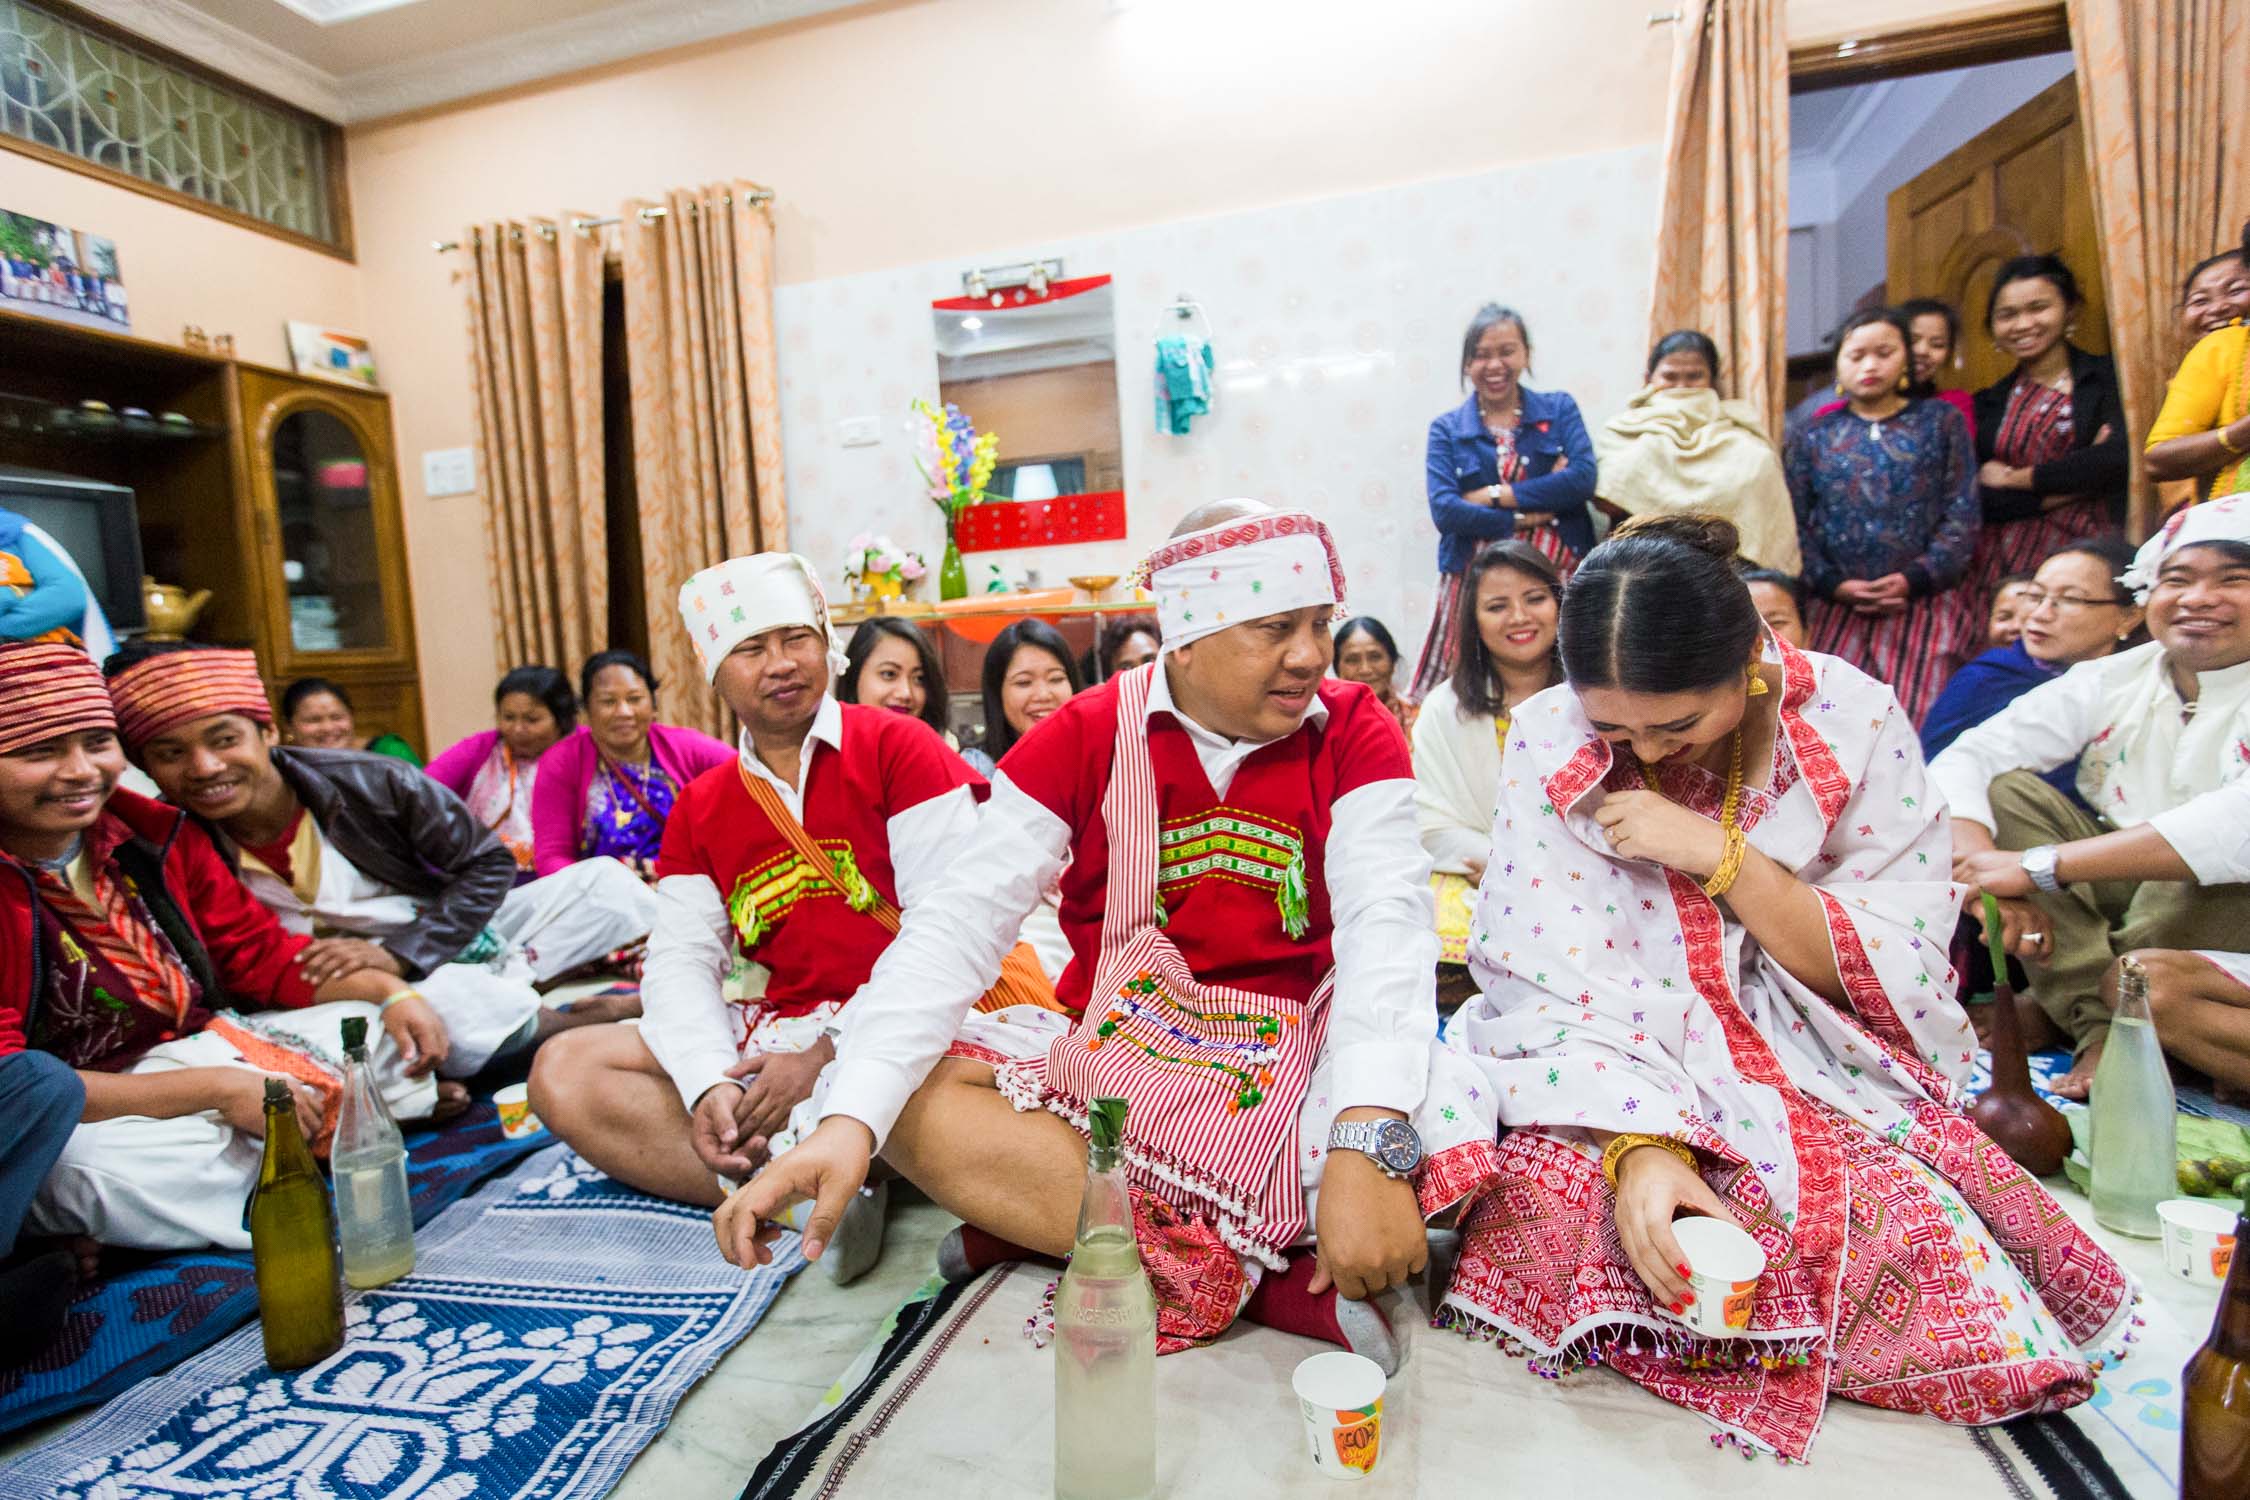 karbi wedding photograph by dropdstudio weddings